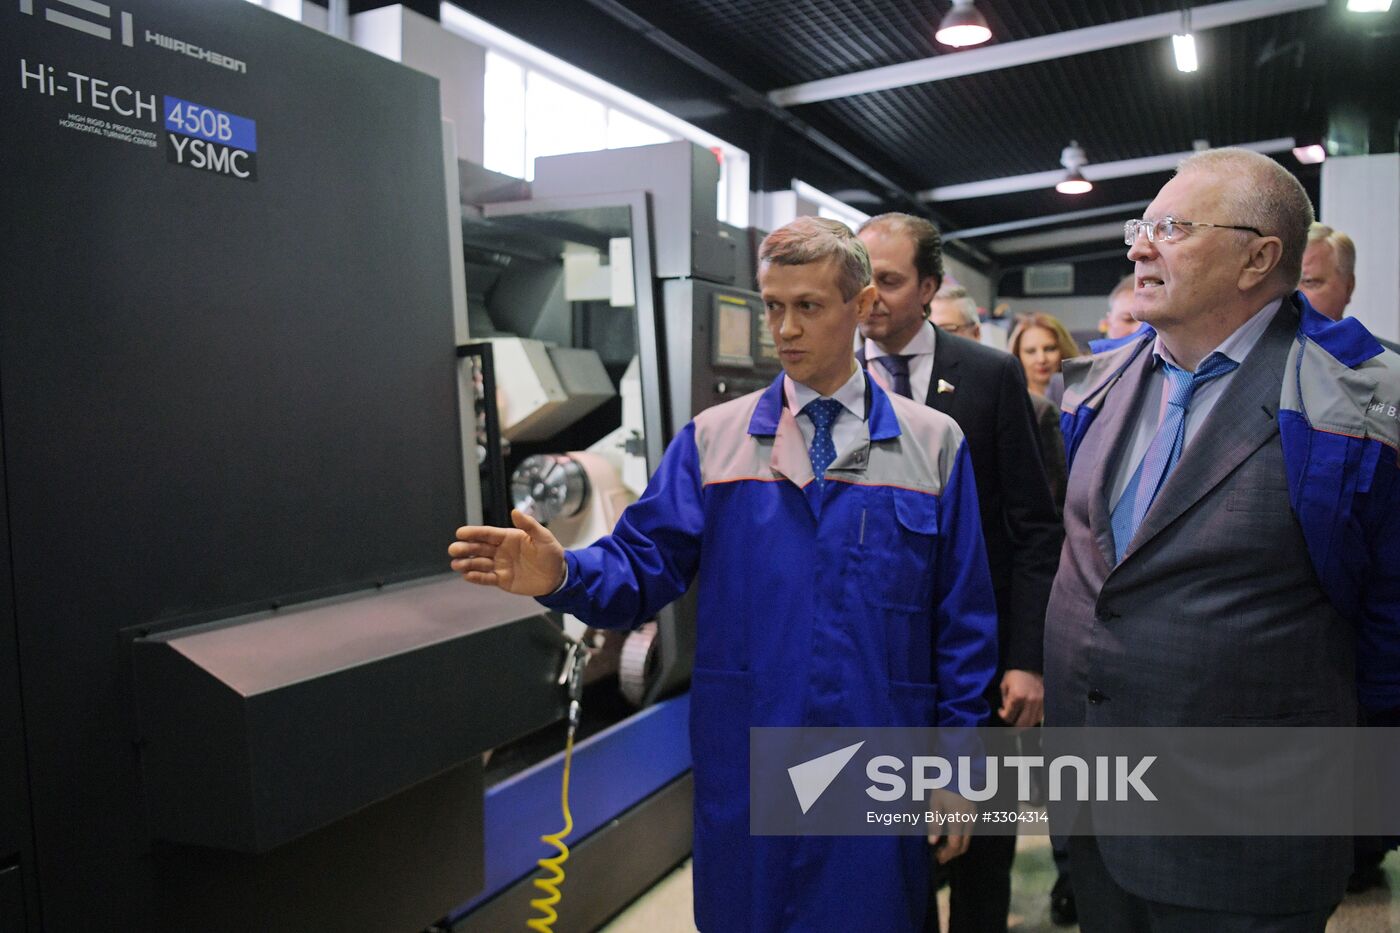 Vladimir Zhirinovsky visits FINVAL Group's mechanical engineering center